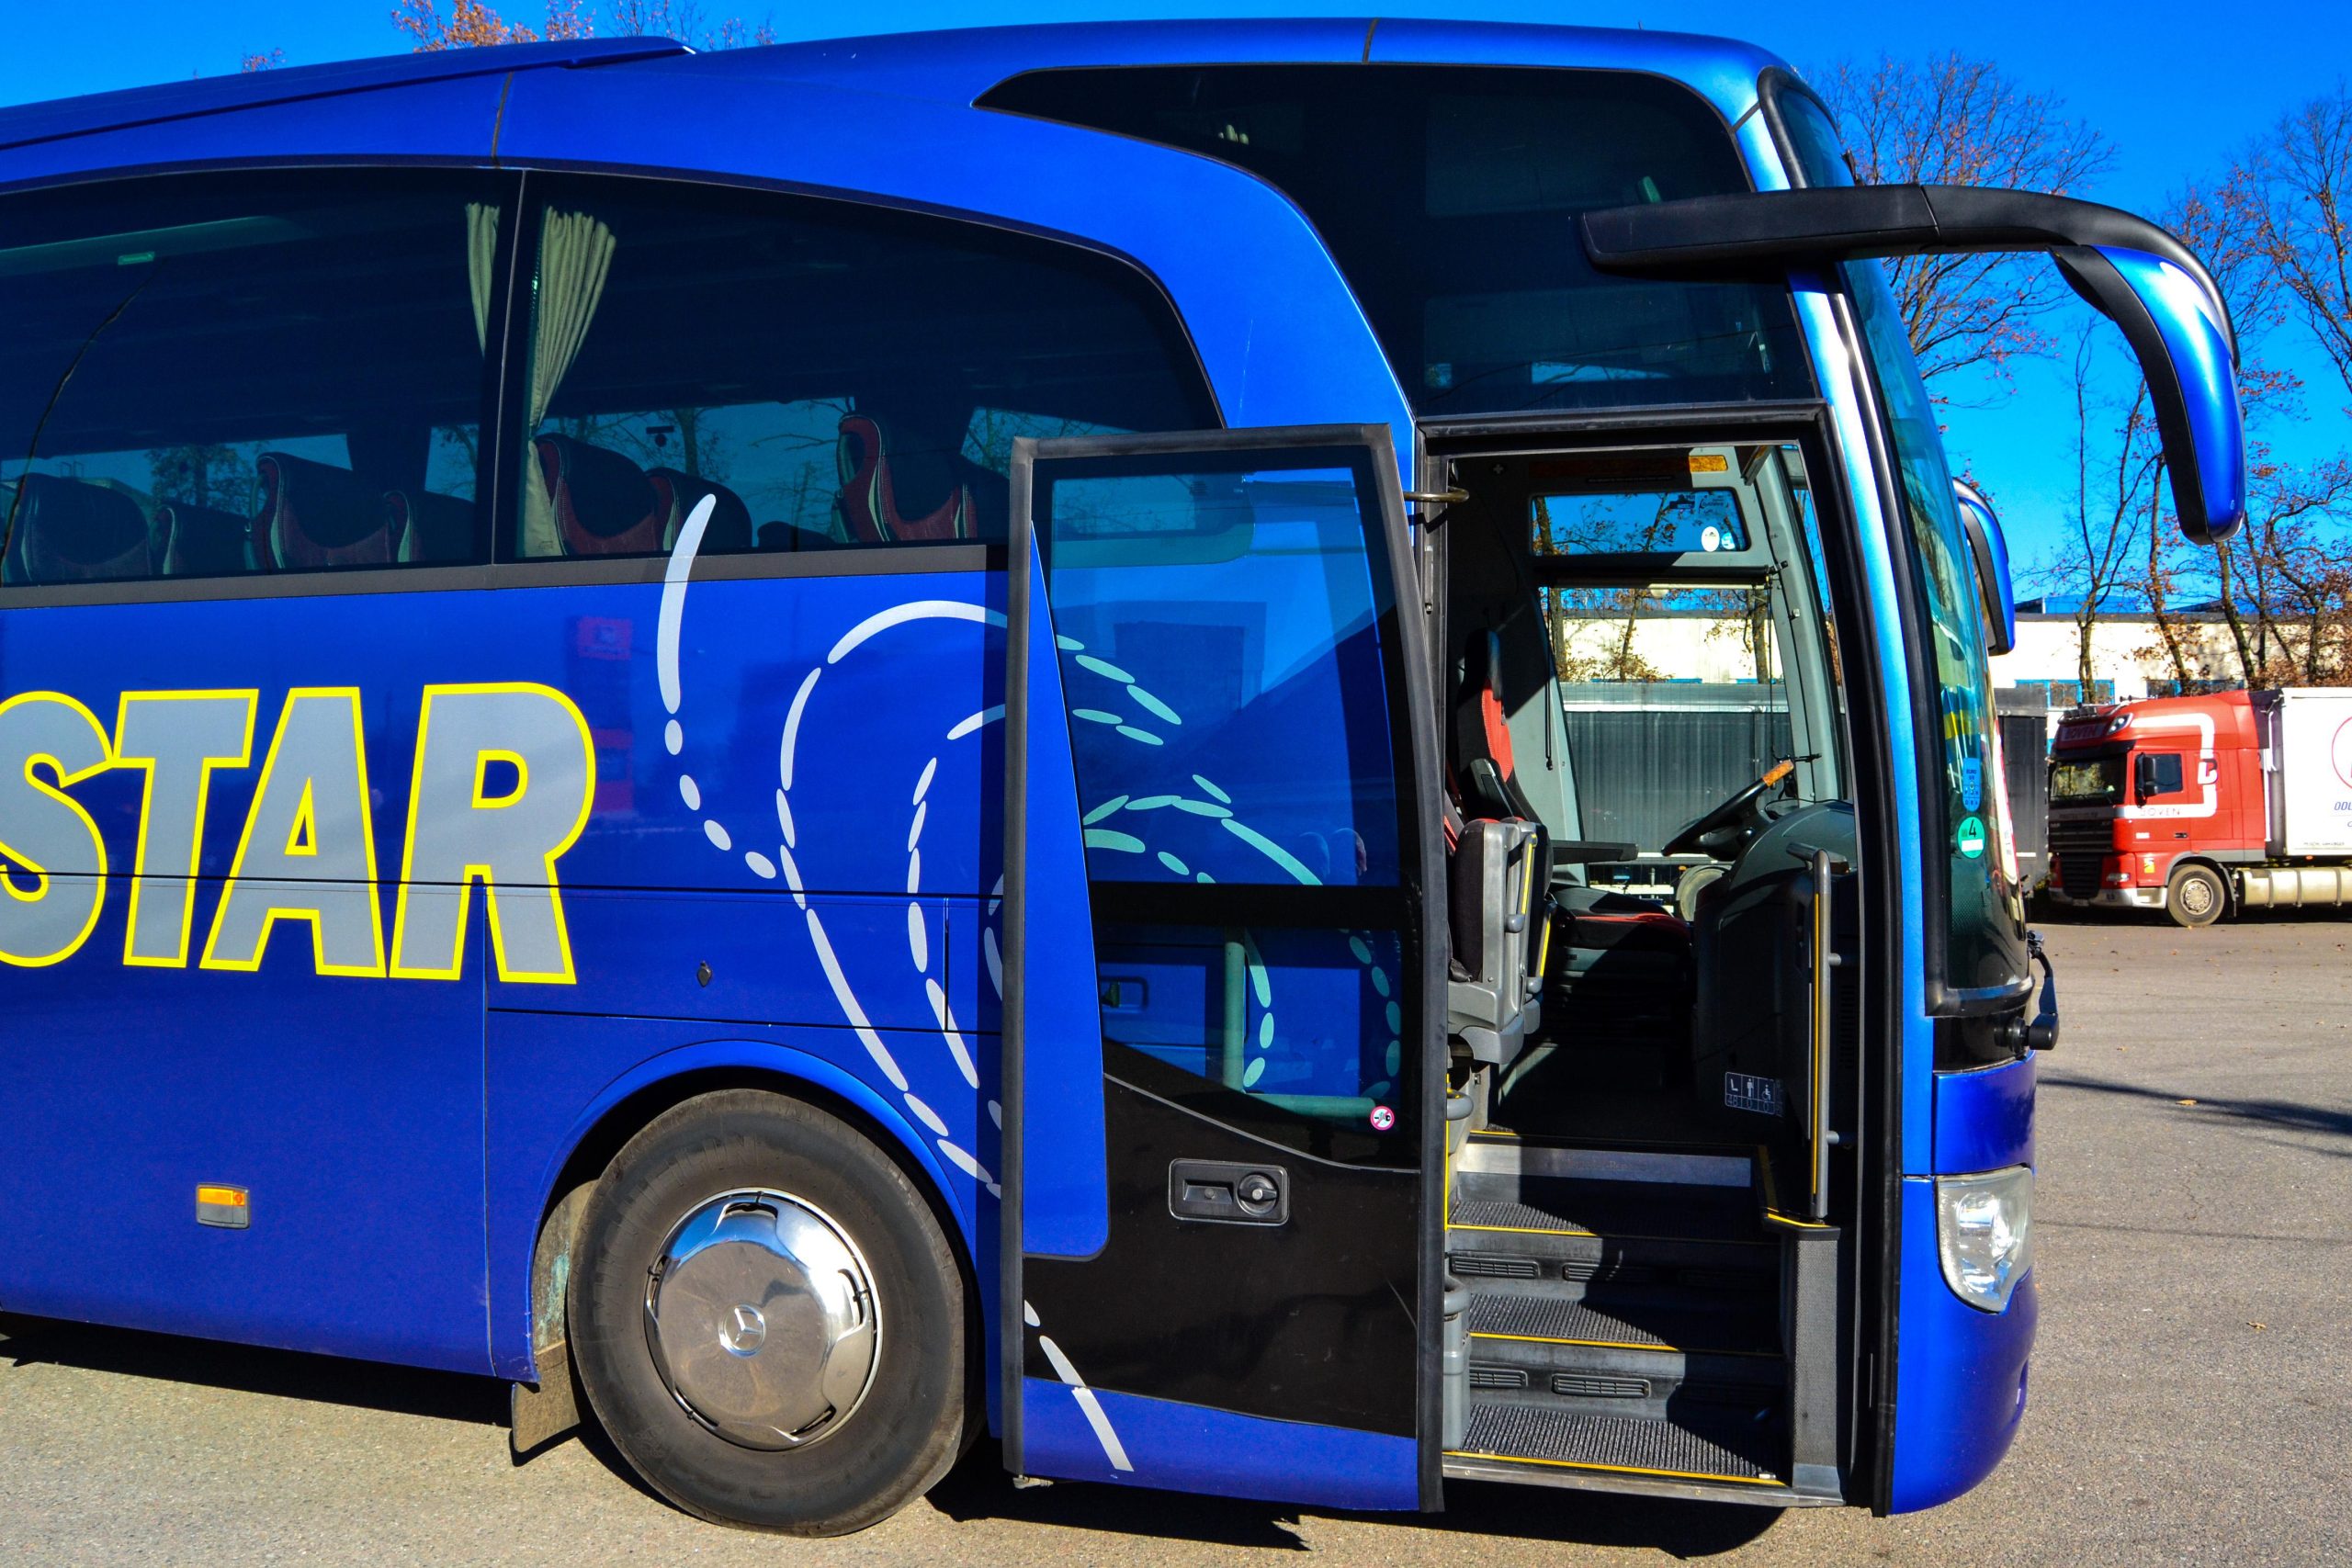 Автобус MERCEDES-BENZ TRAVEGO 2012 год 48+2 места